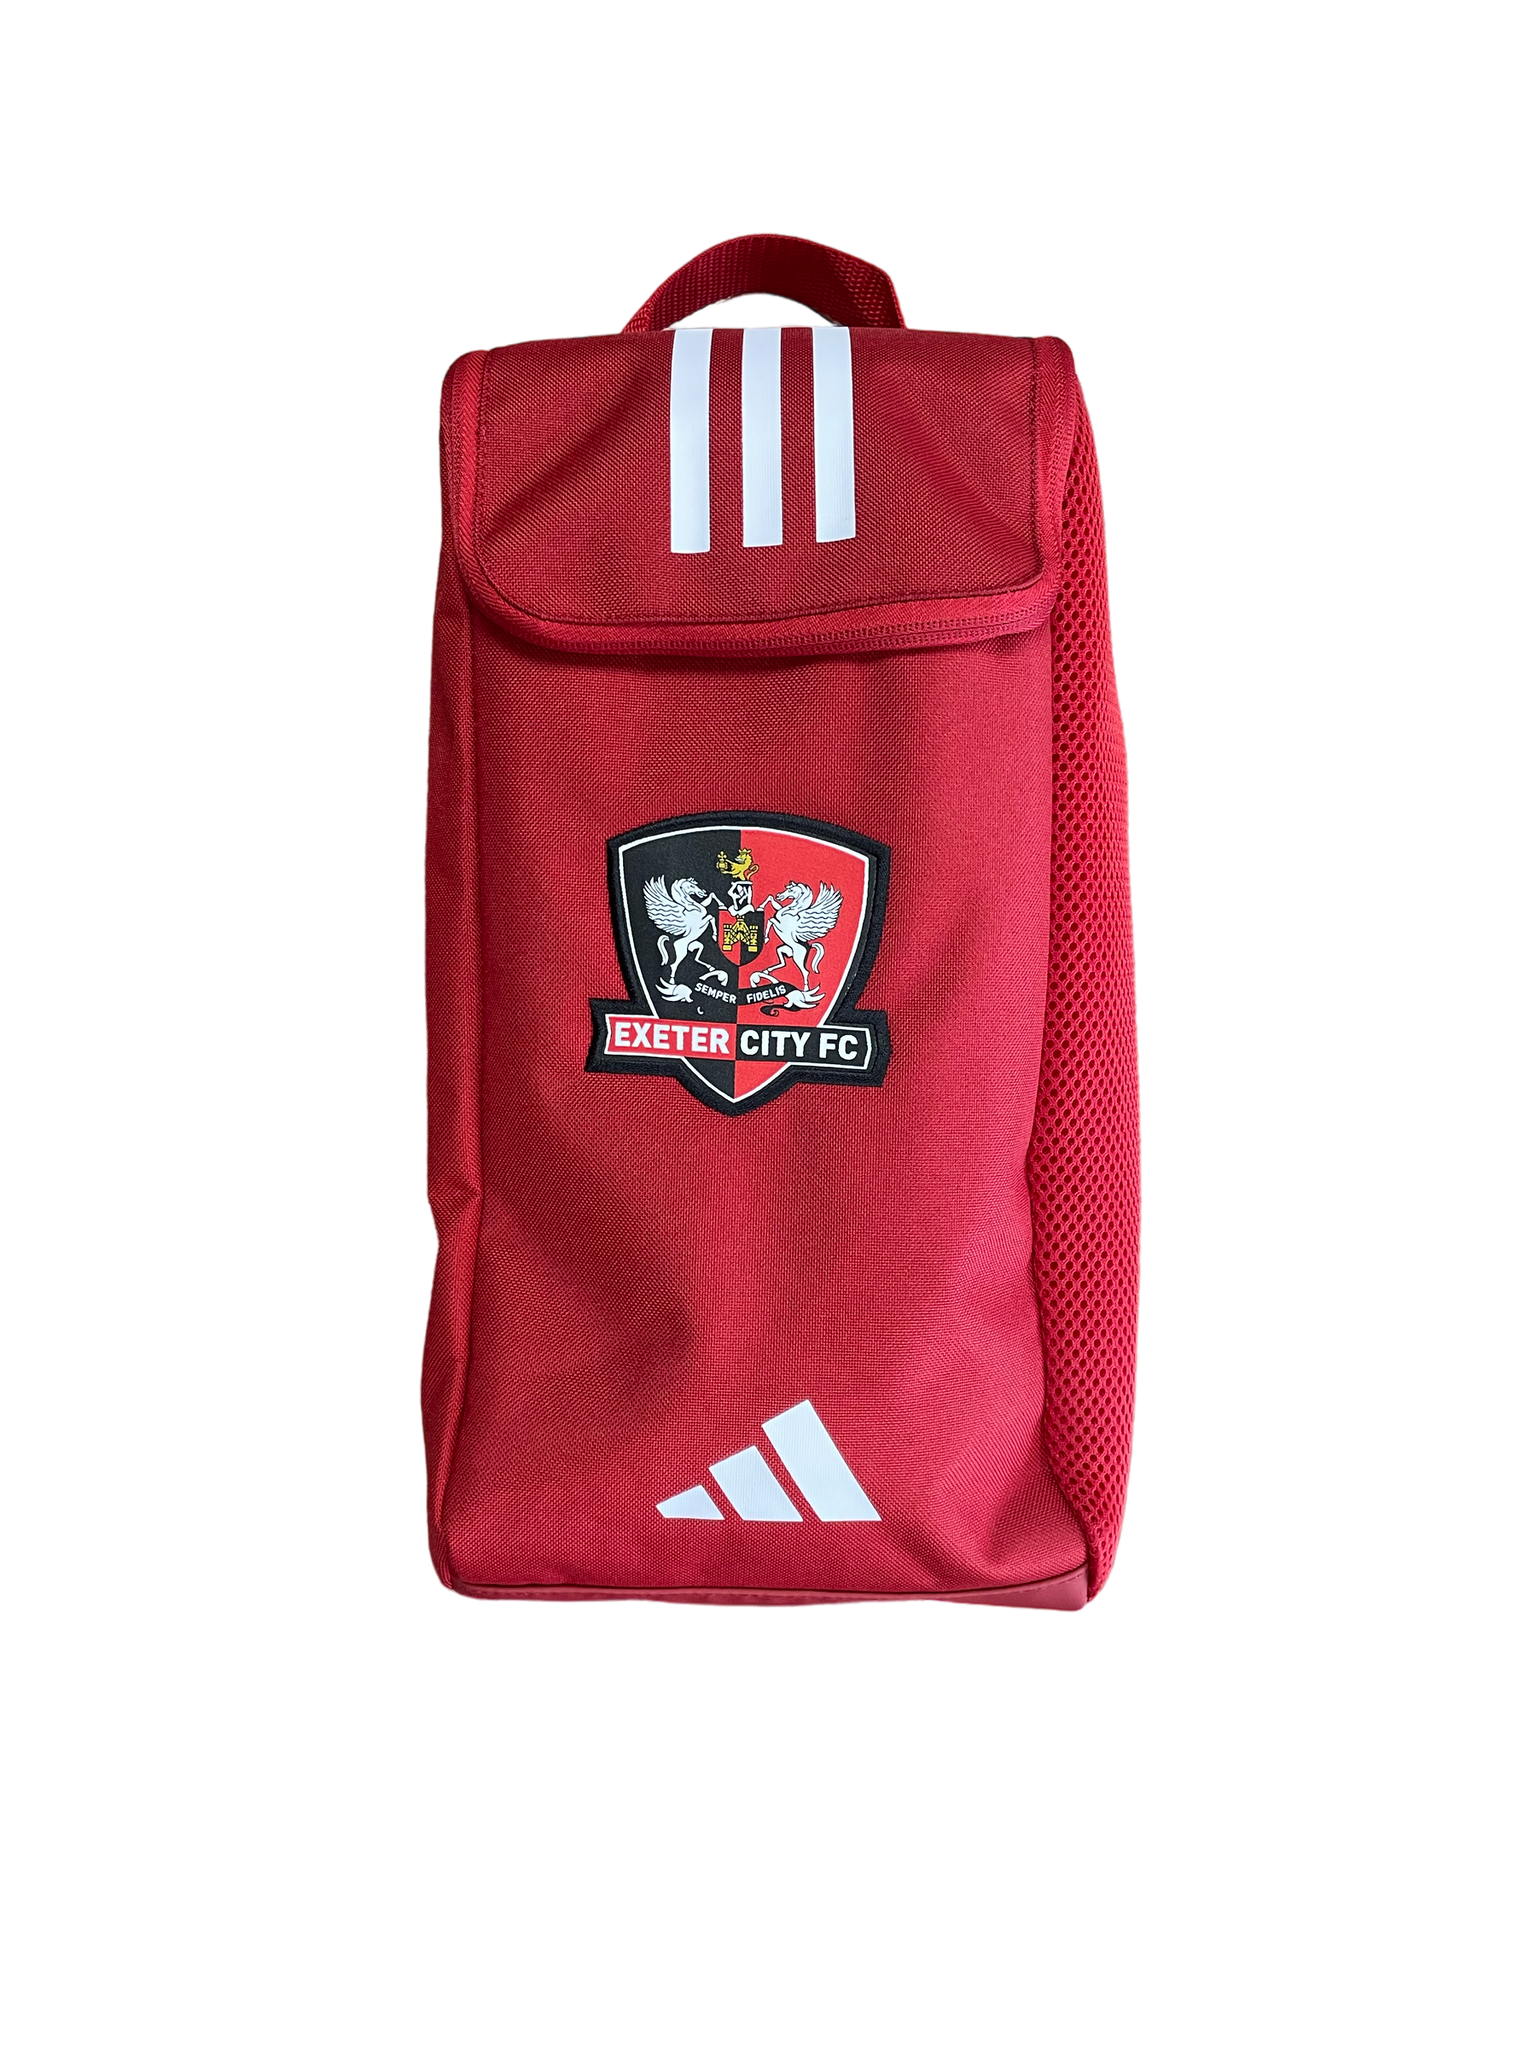 ECFC x Adidas Shoe Bag - Red